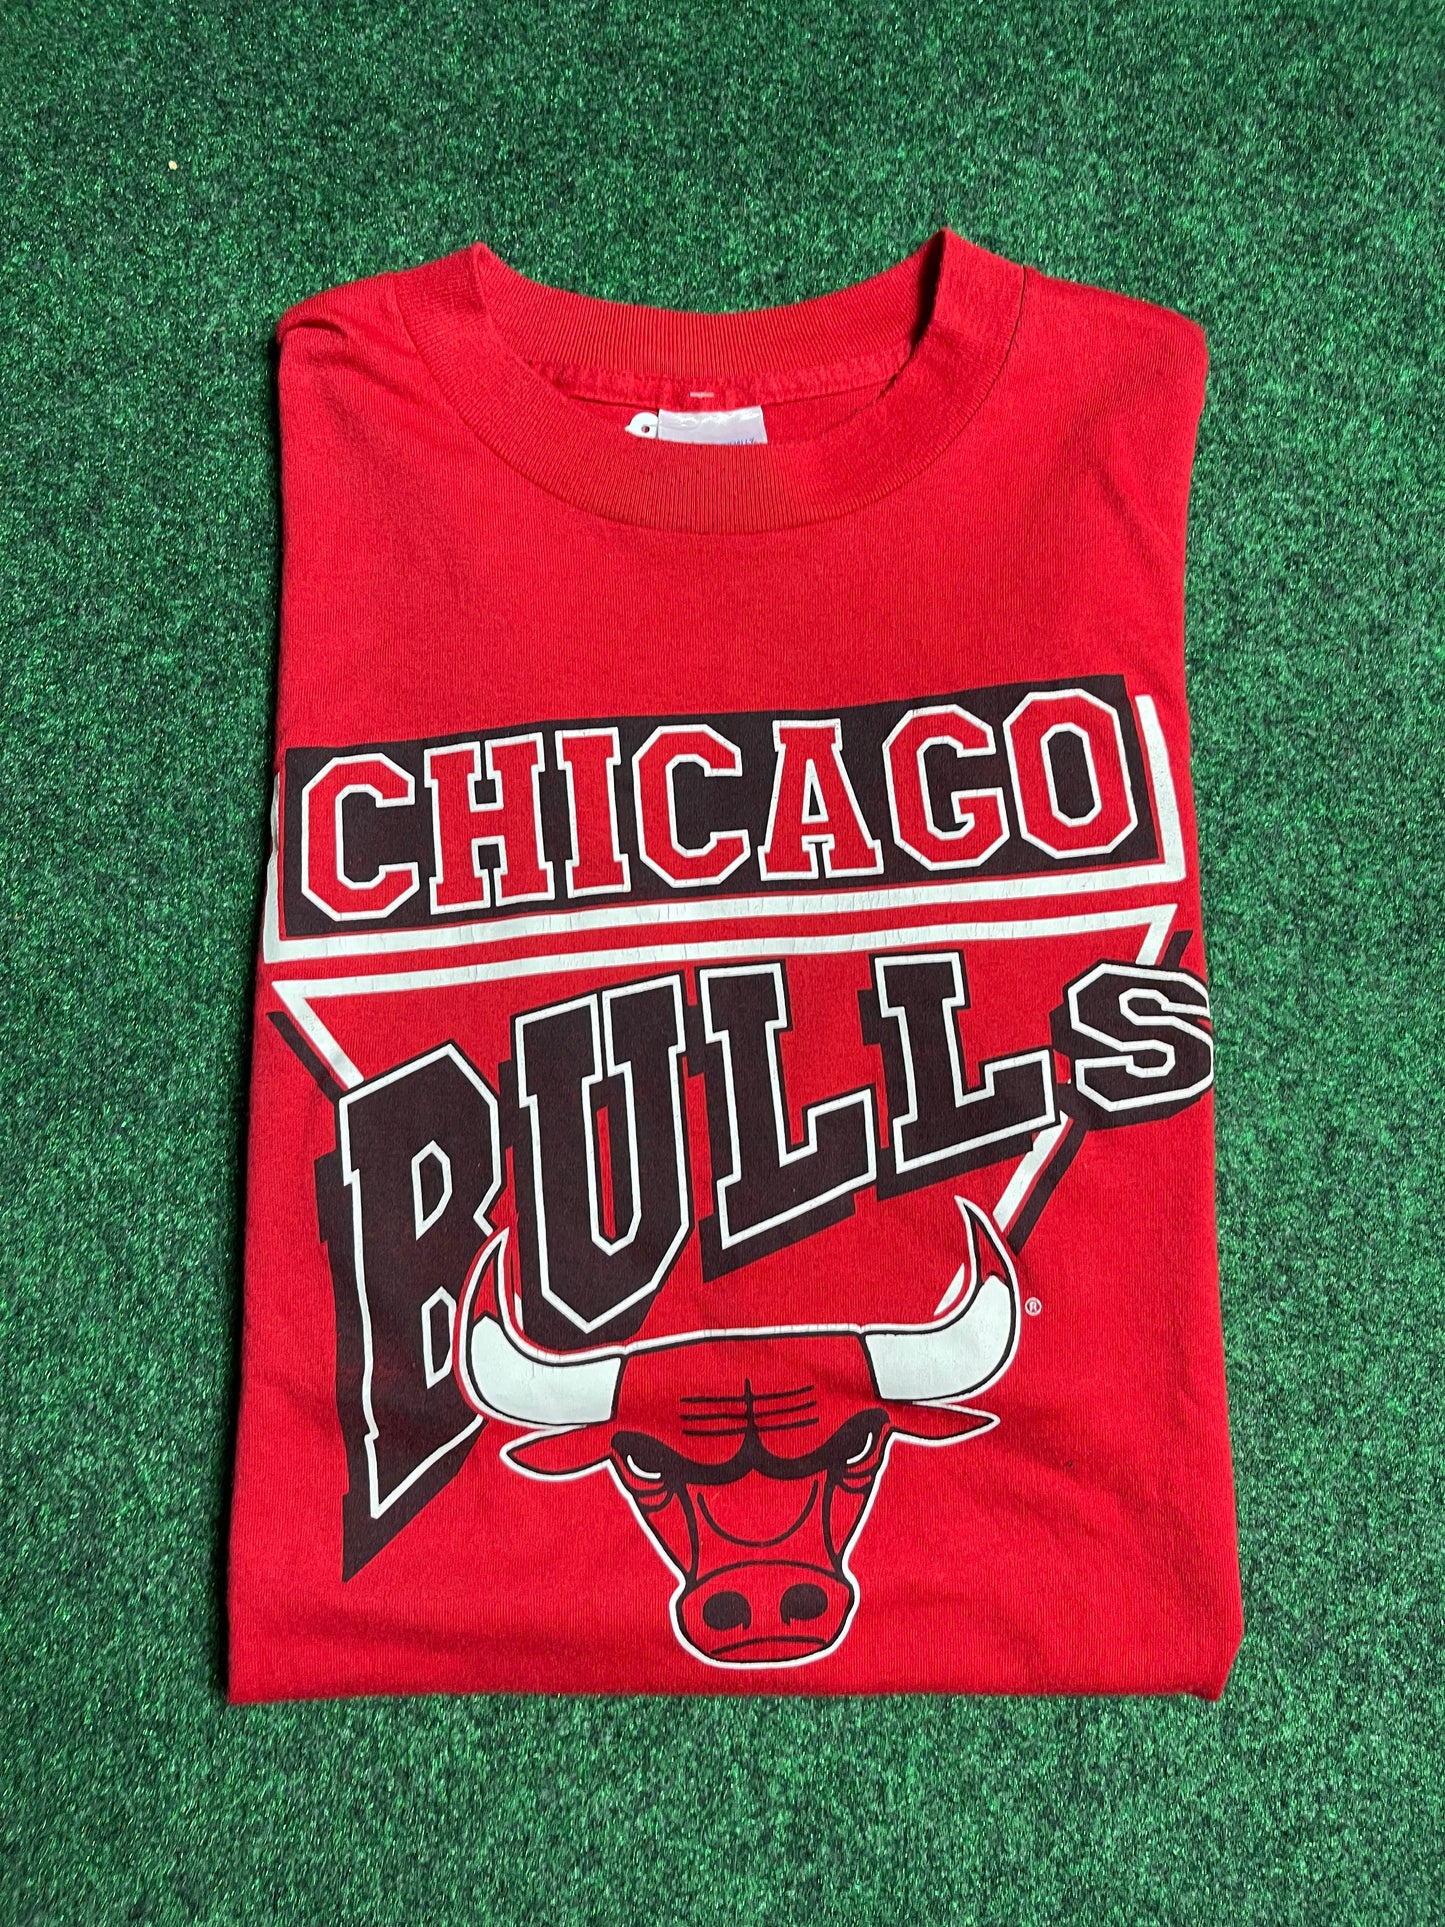 90’s Chicago Bulls Vintage NBA Tee (Large)